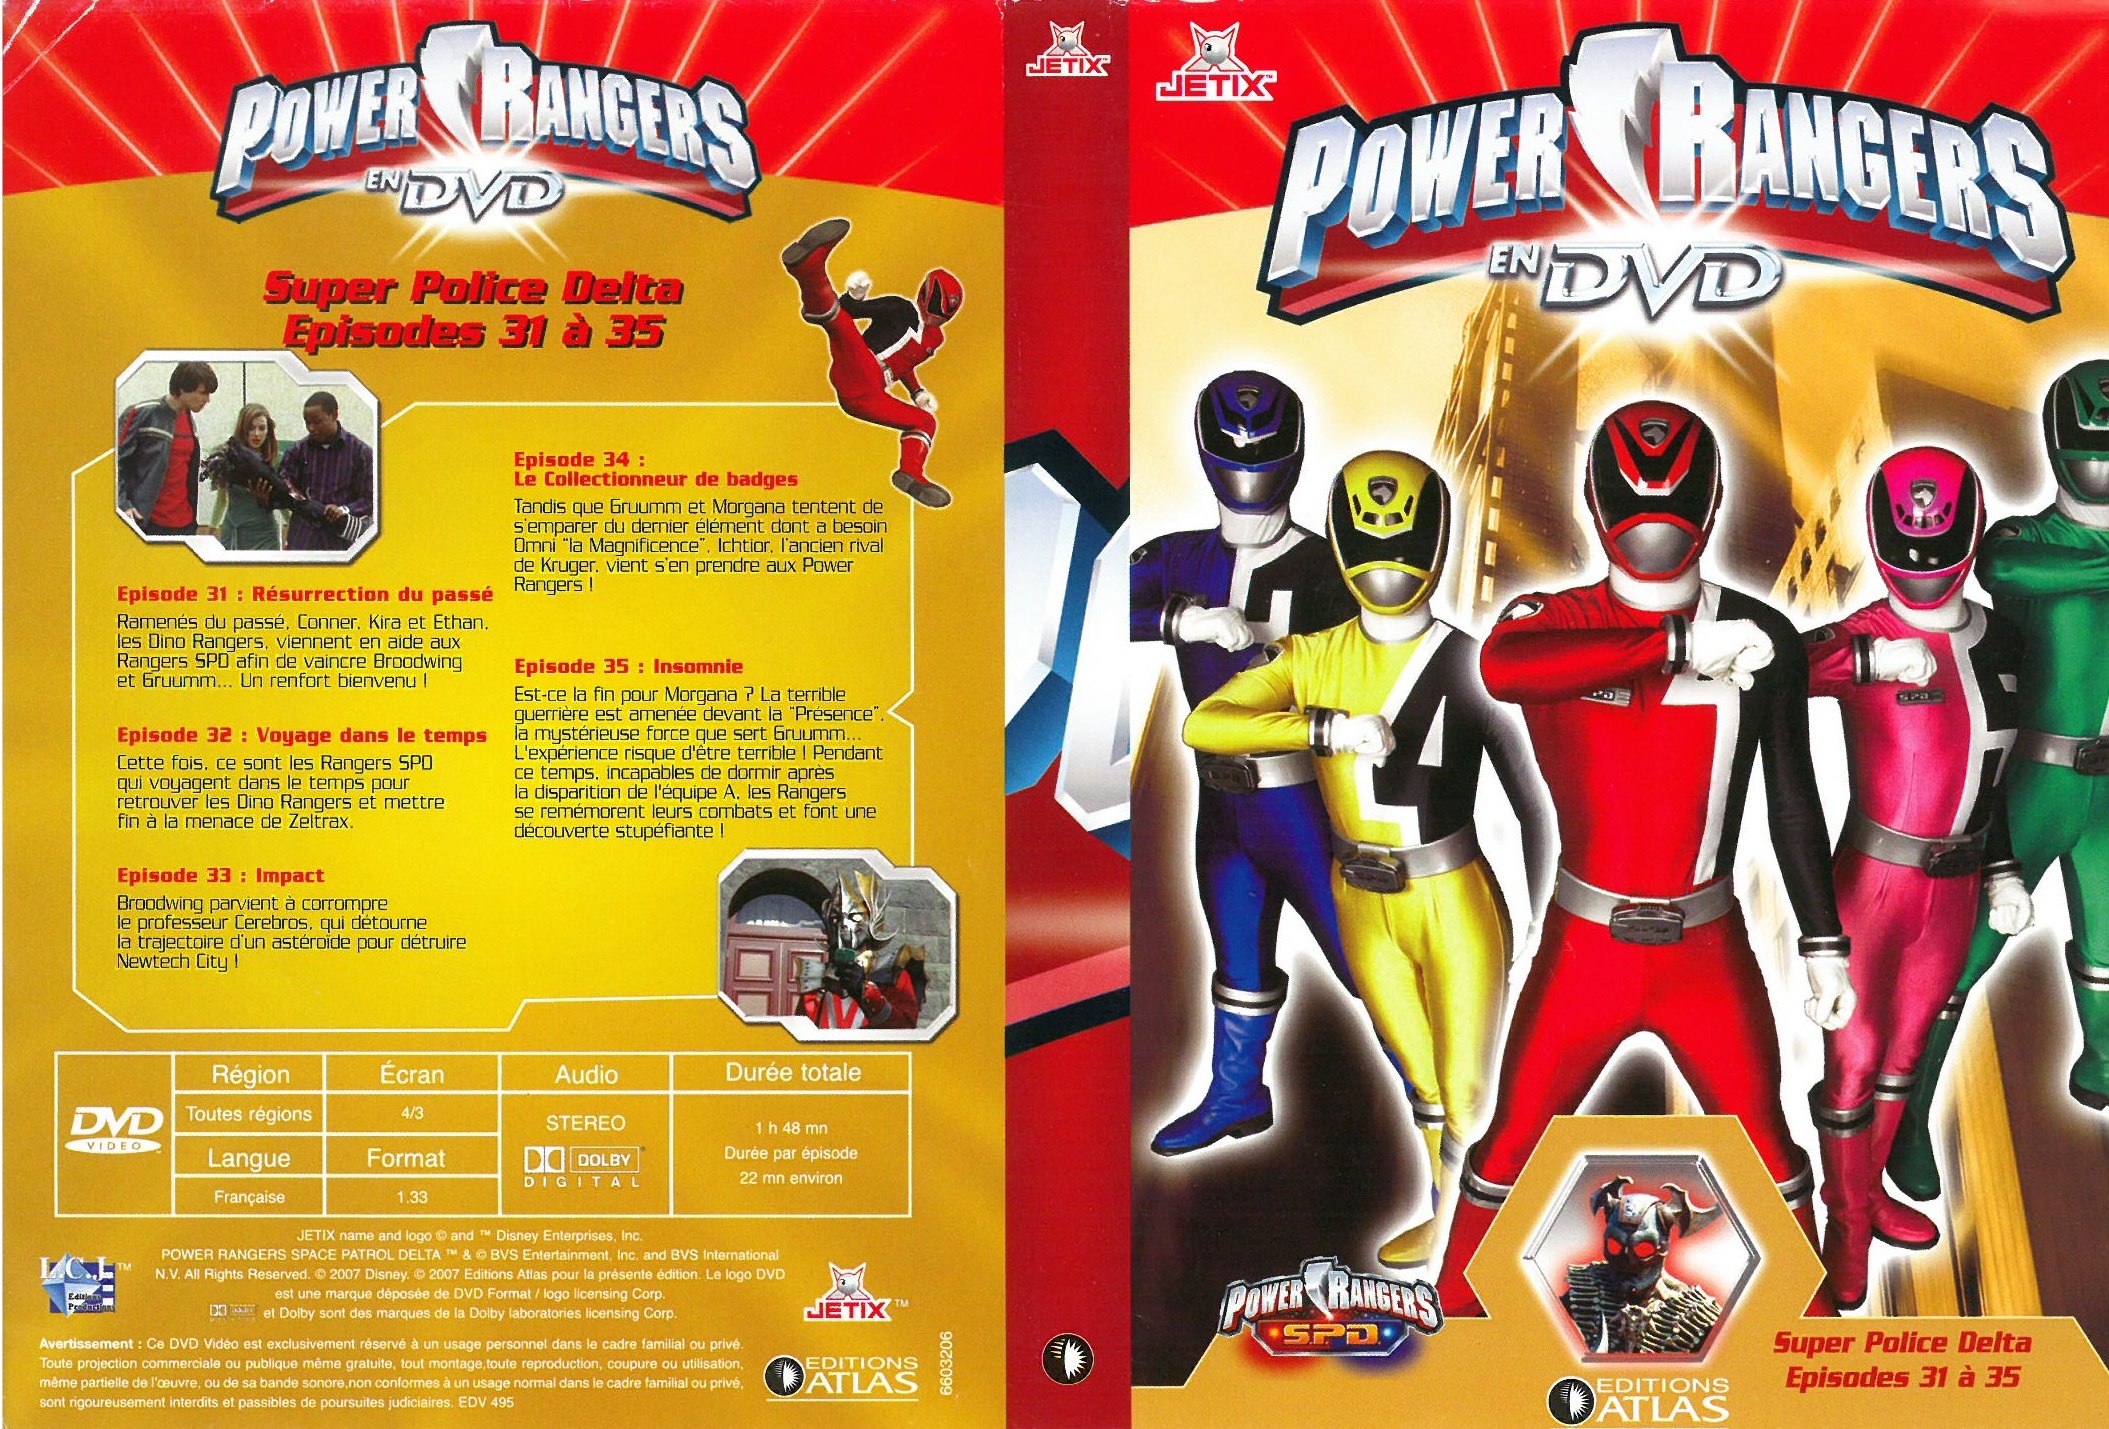 Jaquette DVD Power rangers DVD 8 (Ed Atlas)